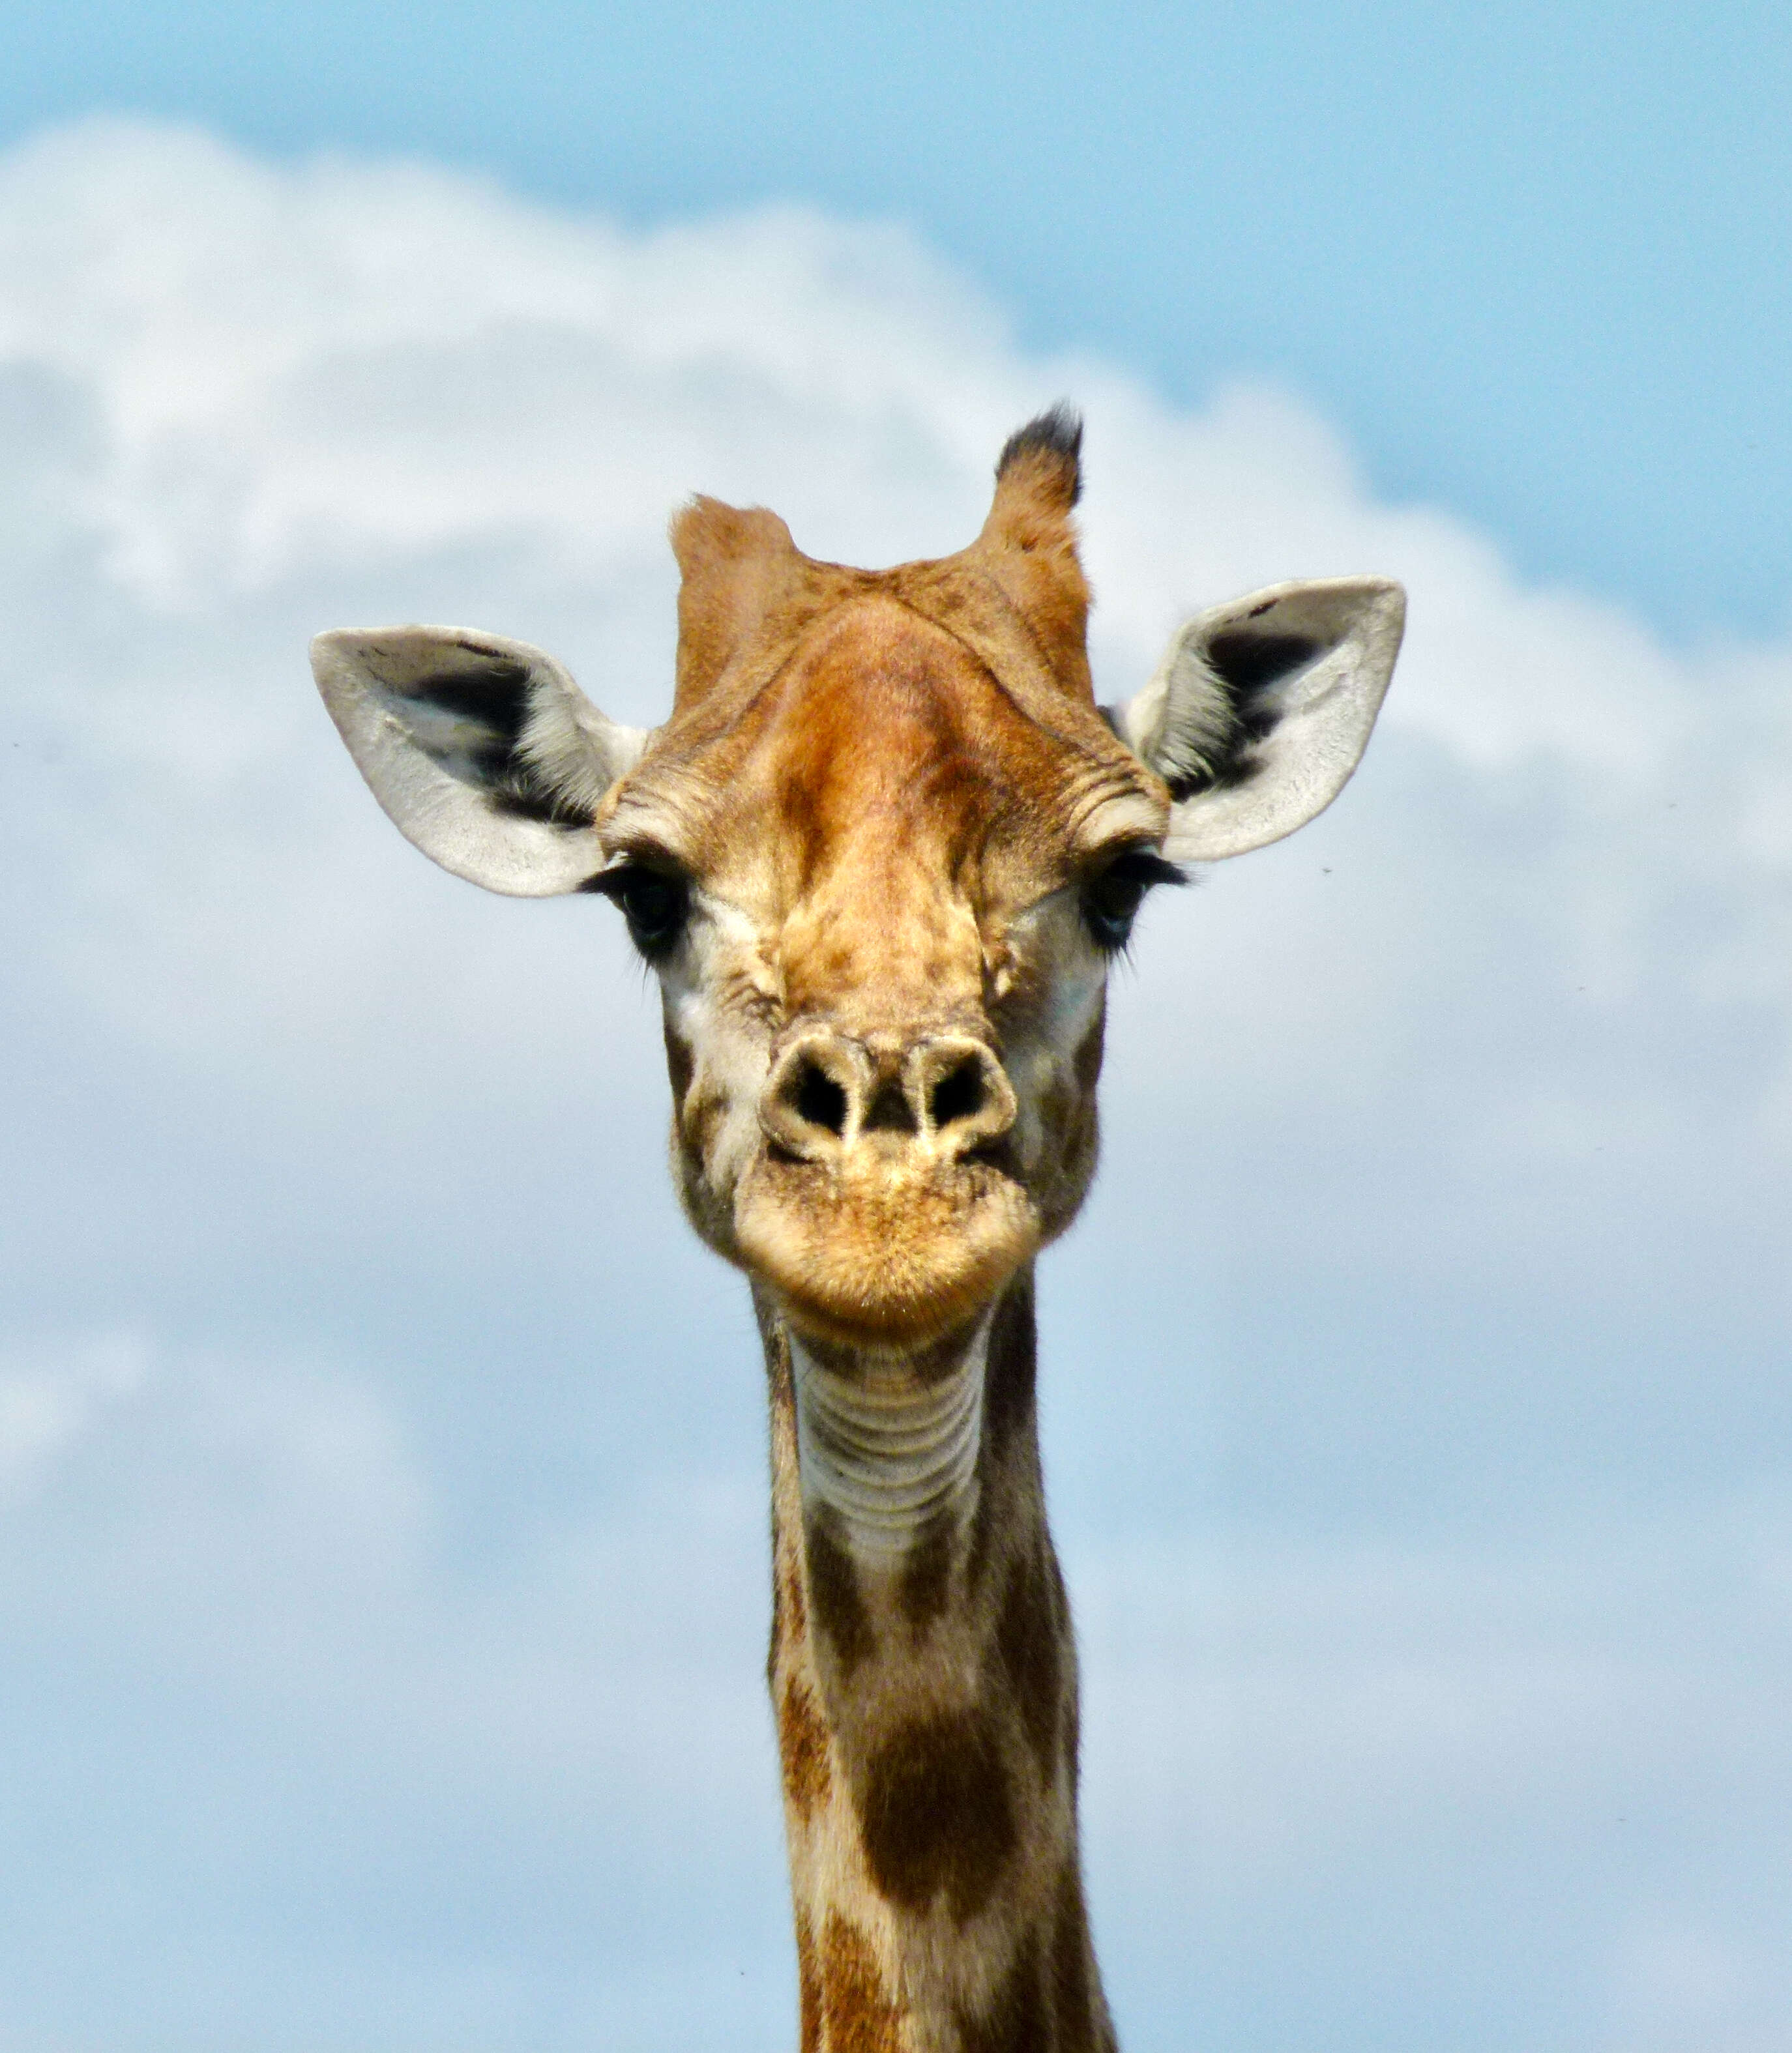 Image of Giraffes